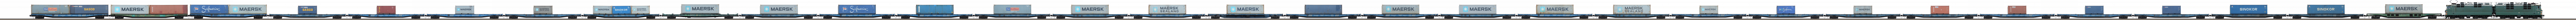 Panorama freight train (2 locomotives and 21 wagon)